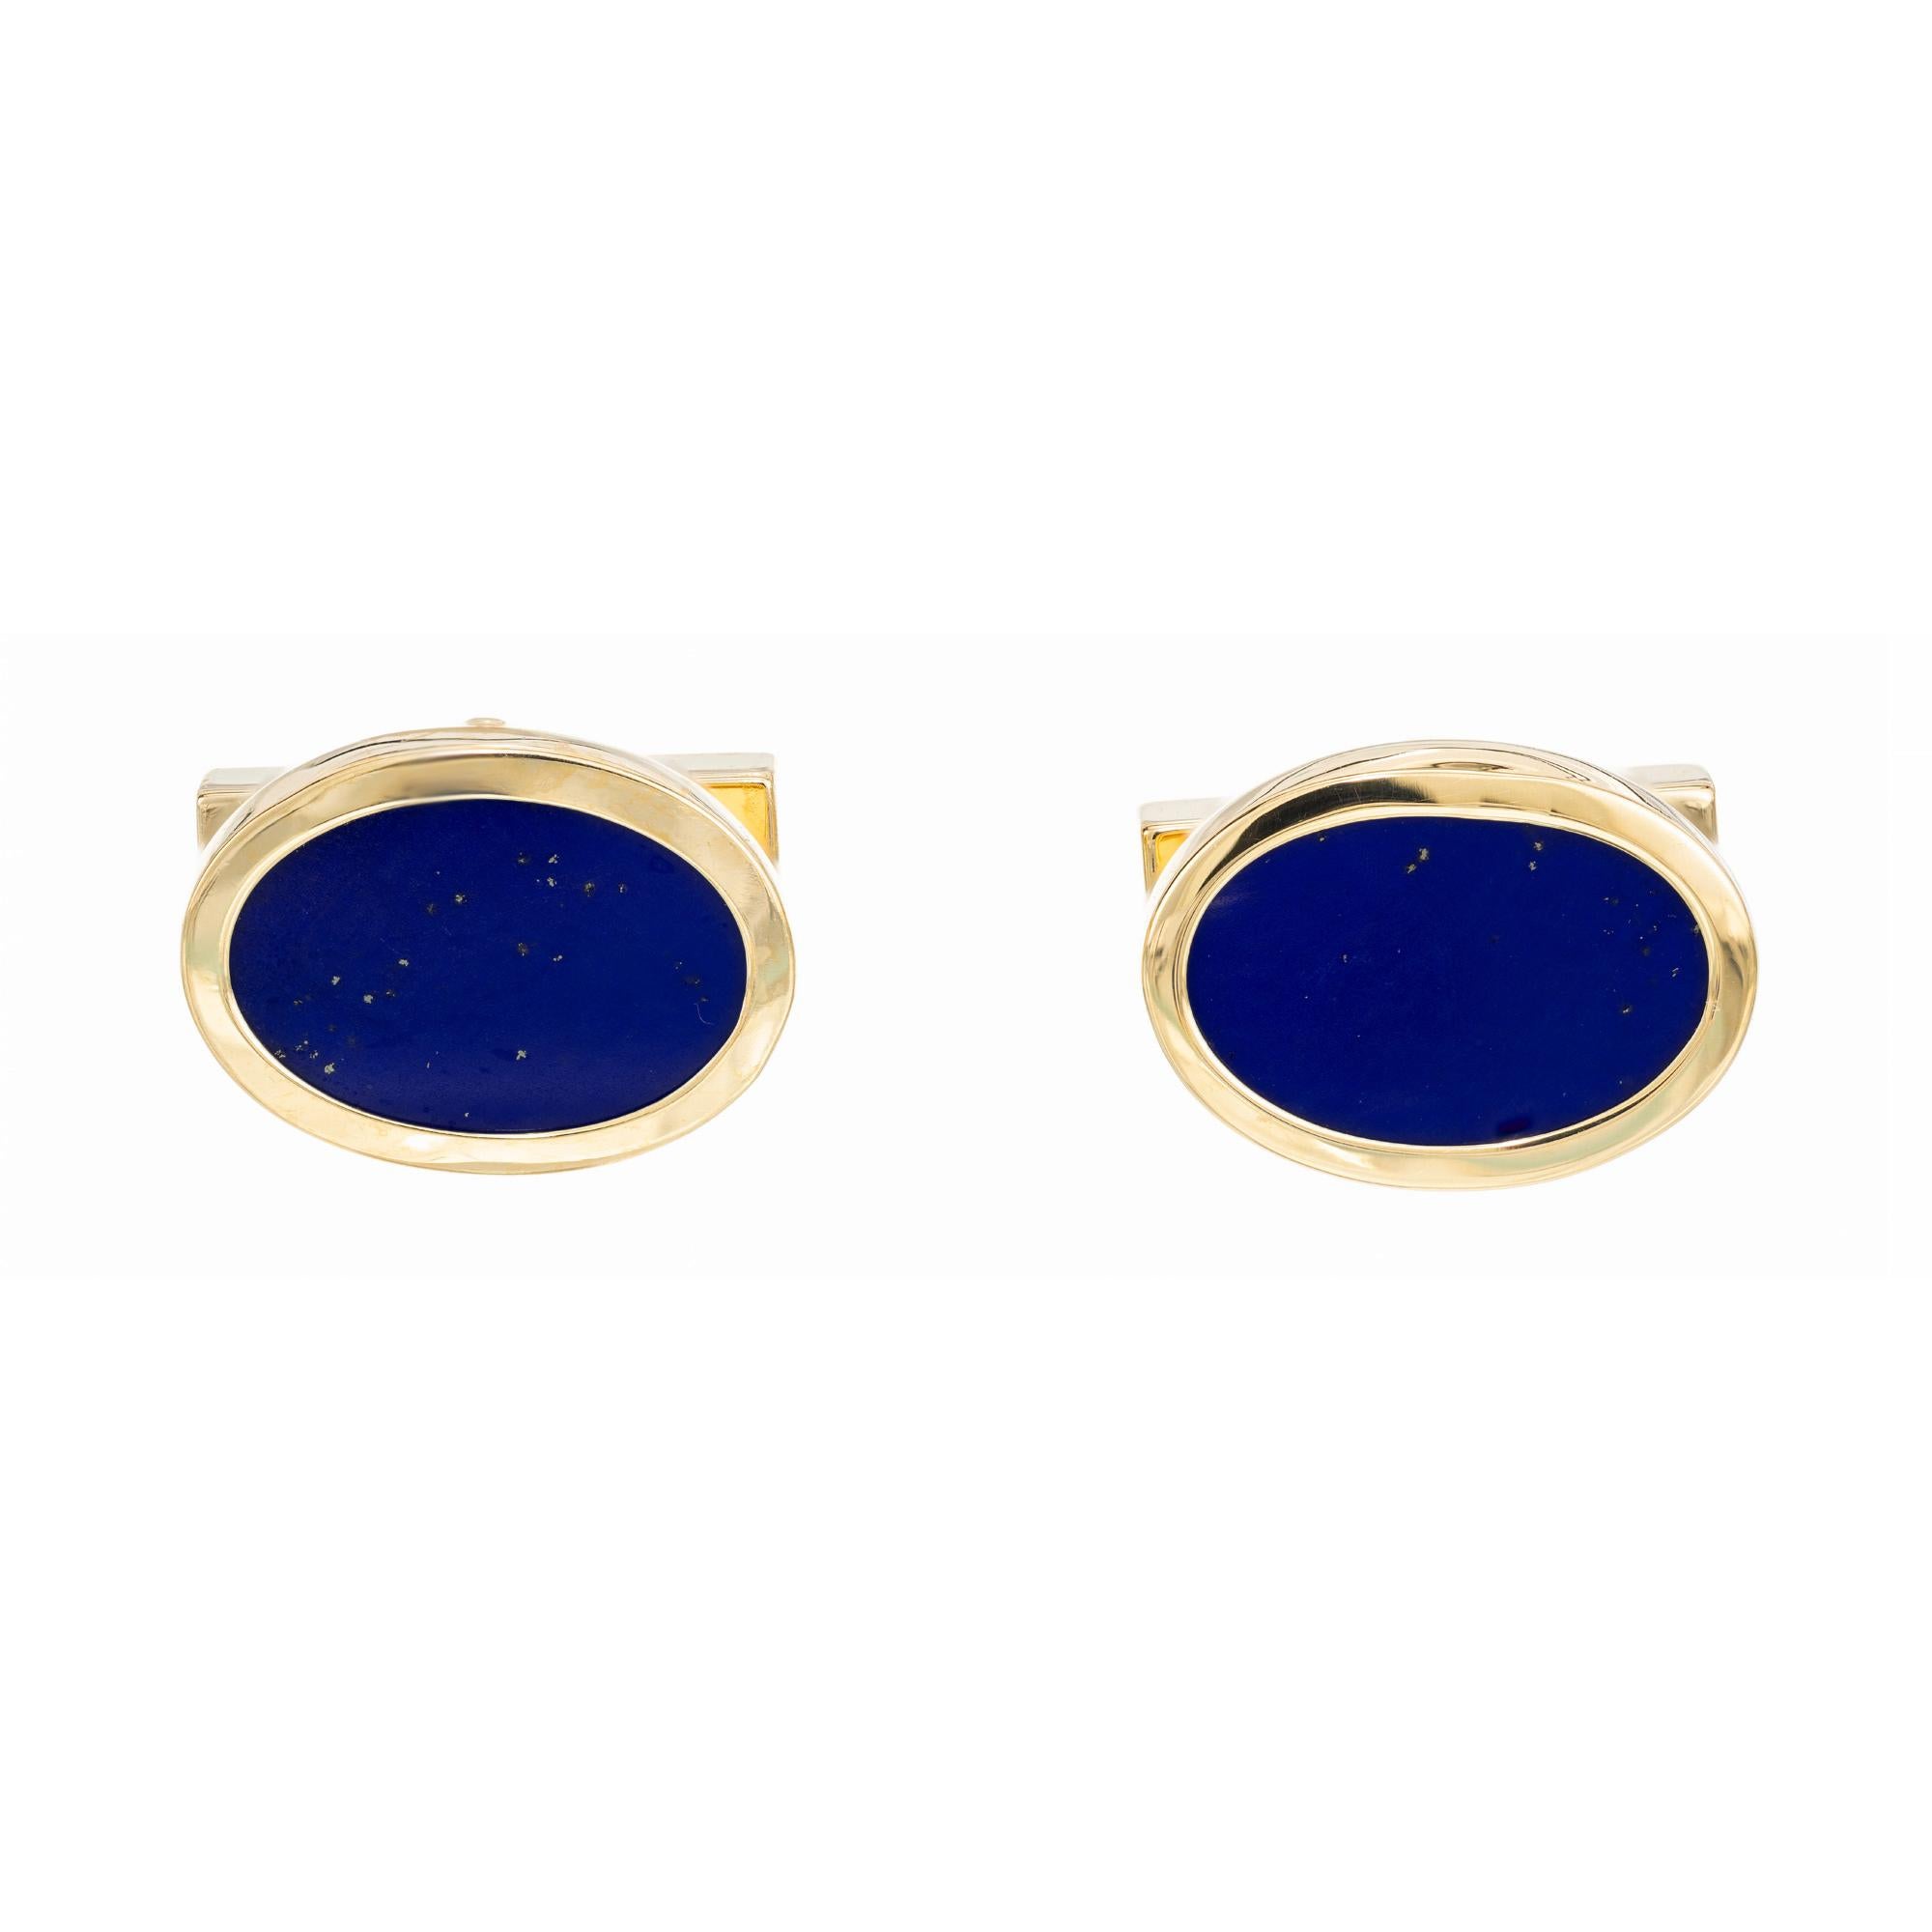 Tiffany & Co Lapis 18k gold cufflinks. Set in 18k yellow gold, 2 rich deep blue oval bezel set Lapis Lazuli. Men's circa 1980's cufflinks. 

2 oval blue lapis lazuli slabs, 15mm x 10mm
18k yellow gold 
Stamped: 18k
Hallmark: Tiffany + Co
14.5